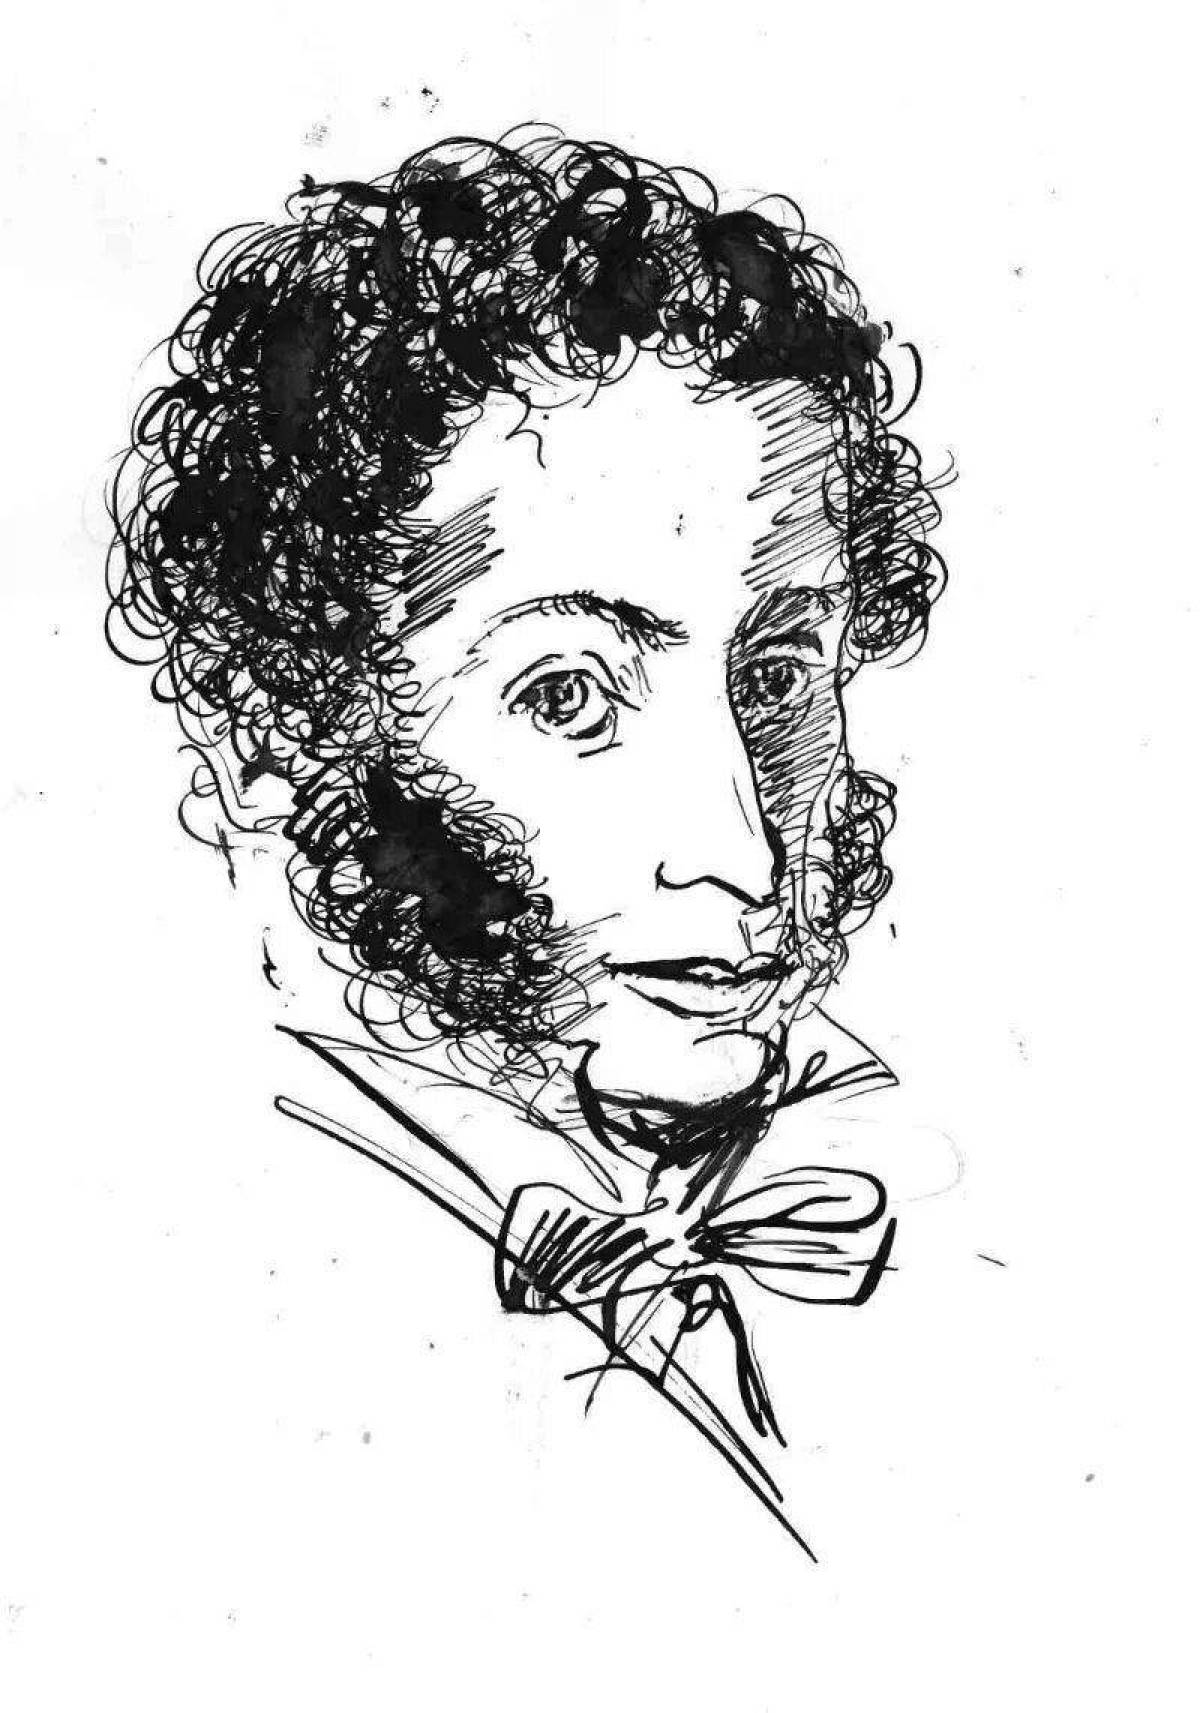 Coloring book magnanimous portrait of Pushkin